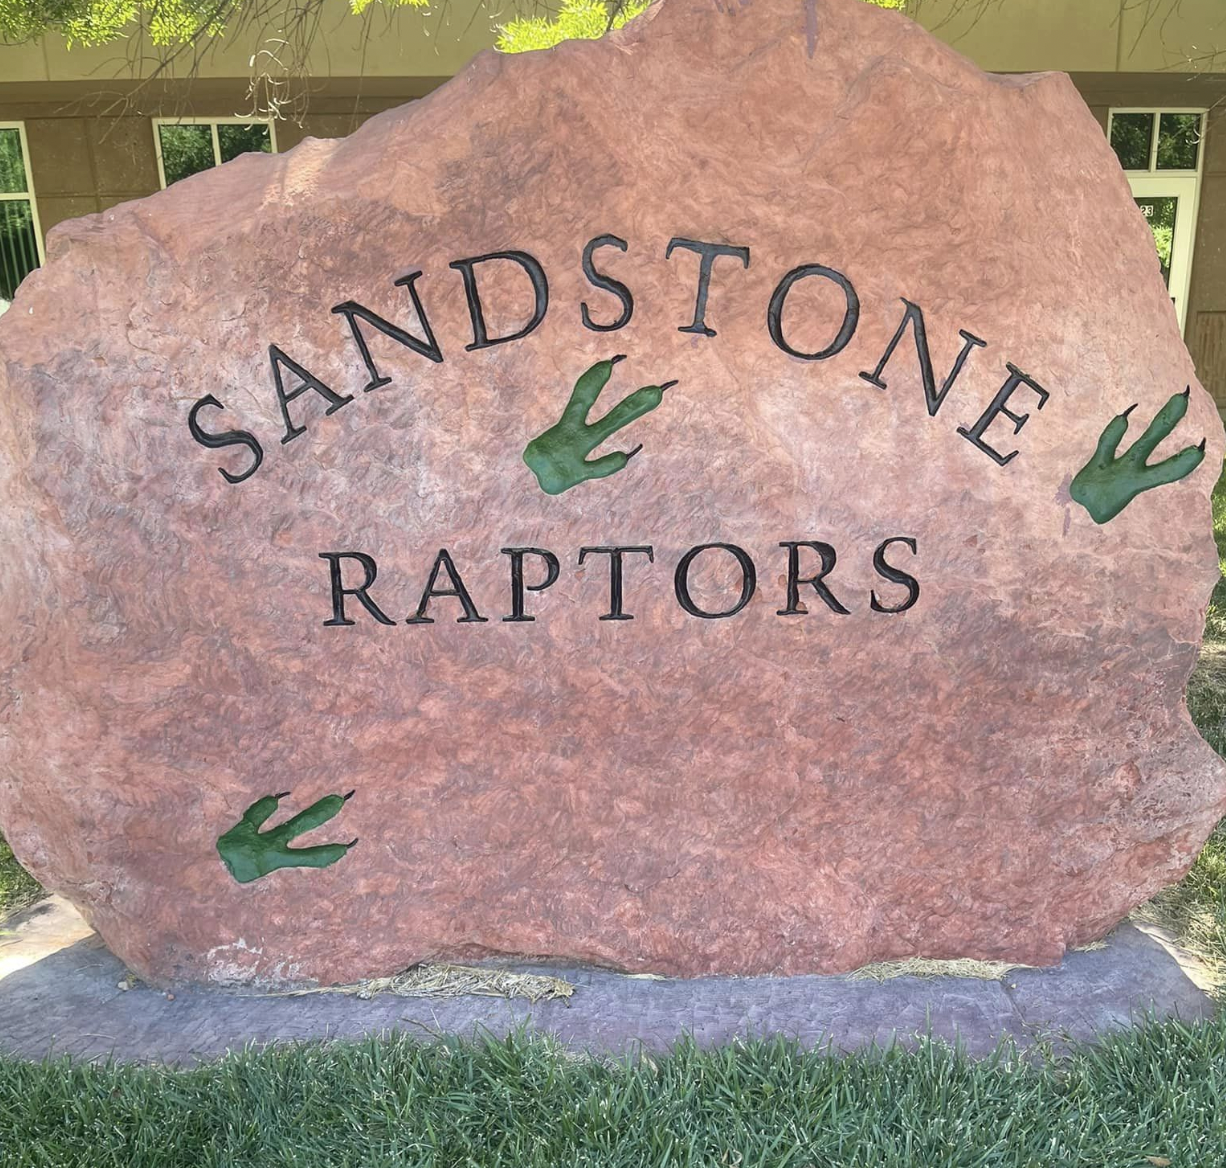 Sandstone Raptors stone plaque outside of building.